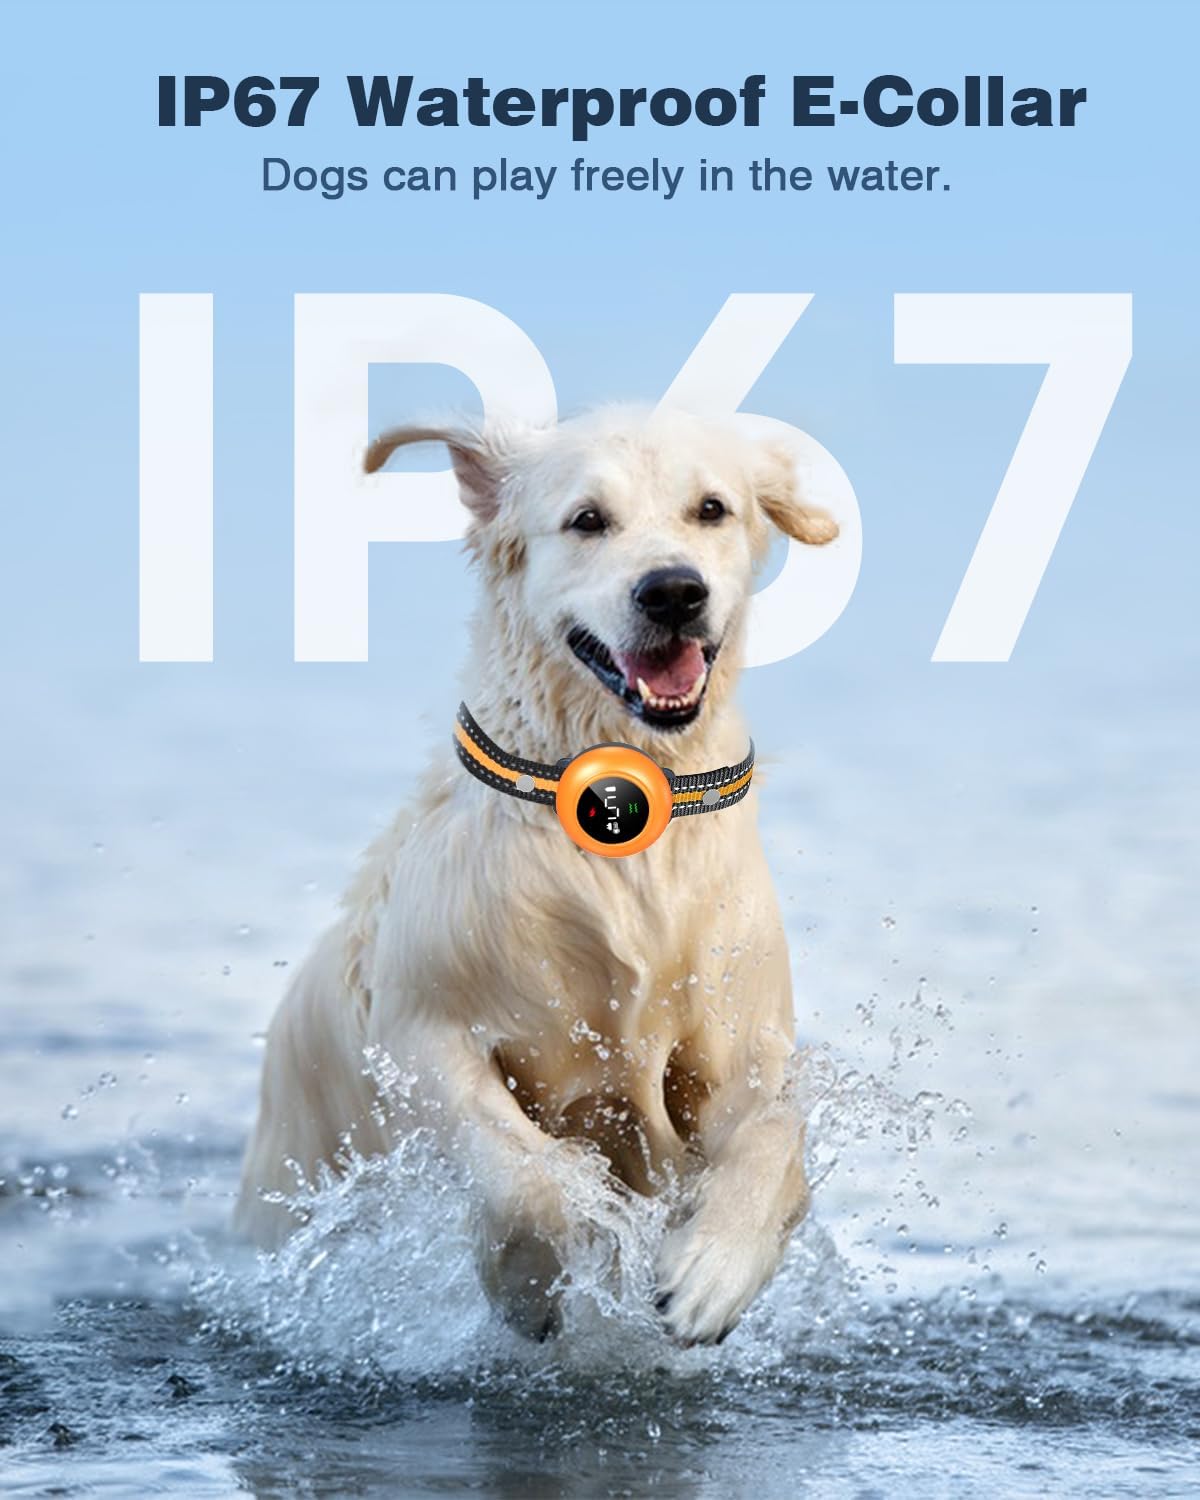 2-in-1 Dog Shock & Bark Collar - Smart Training, Adjustable Sensitivity, 3300FT Remote, Waterproof, Beep Vibration Shock